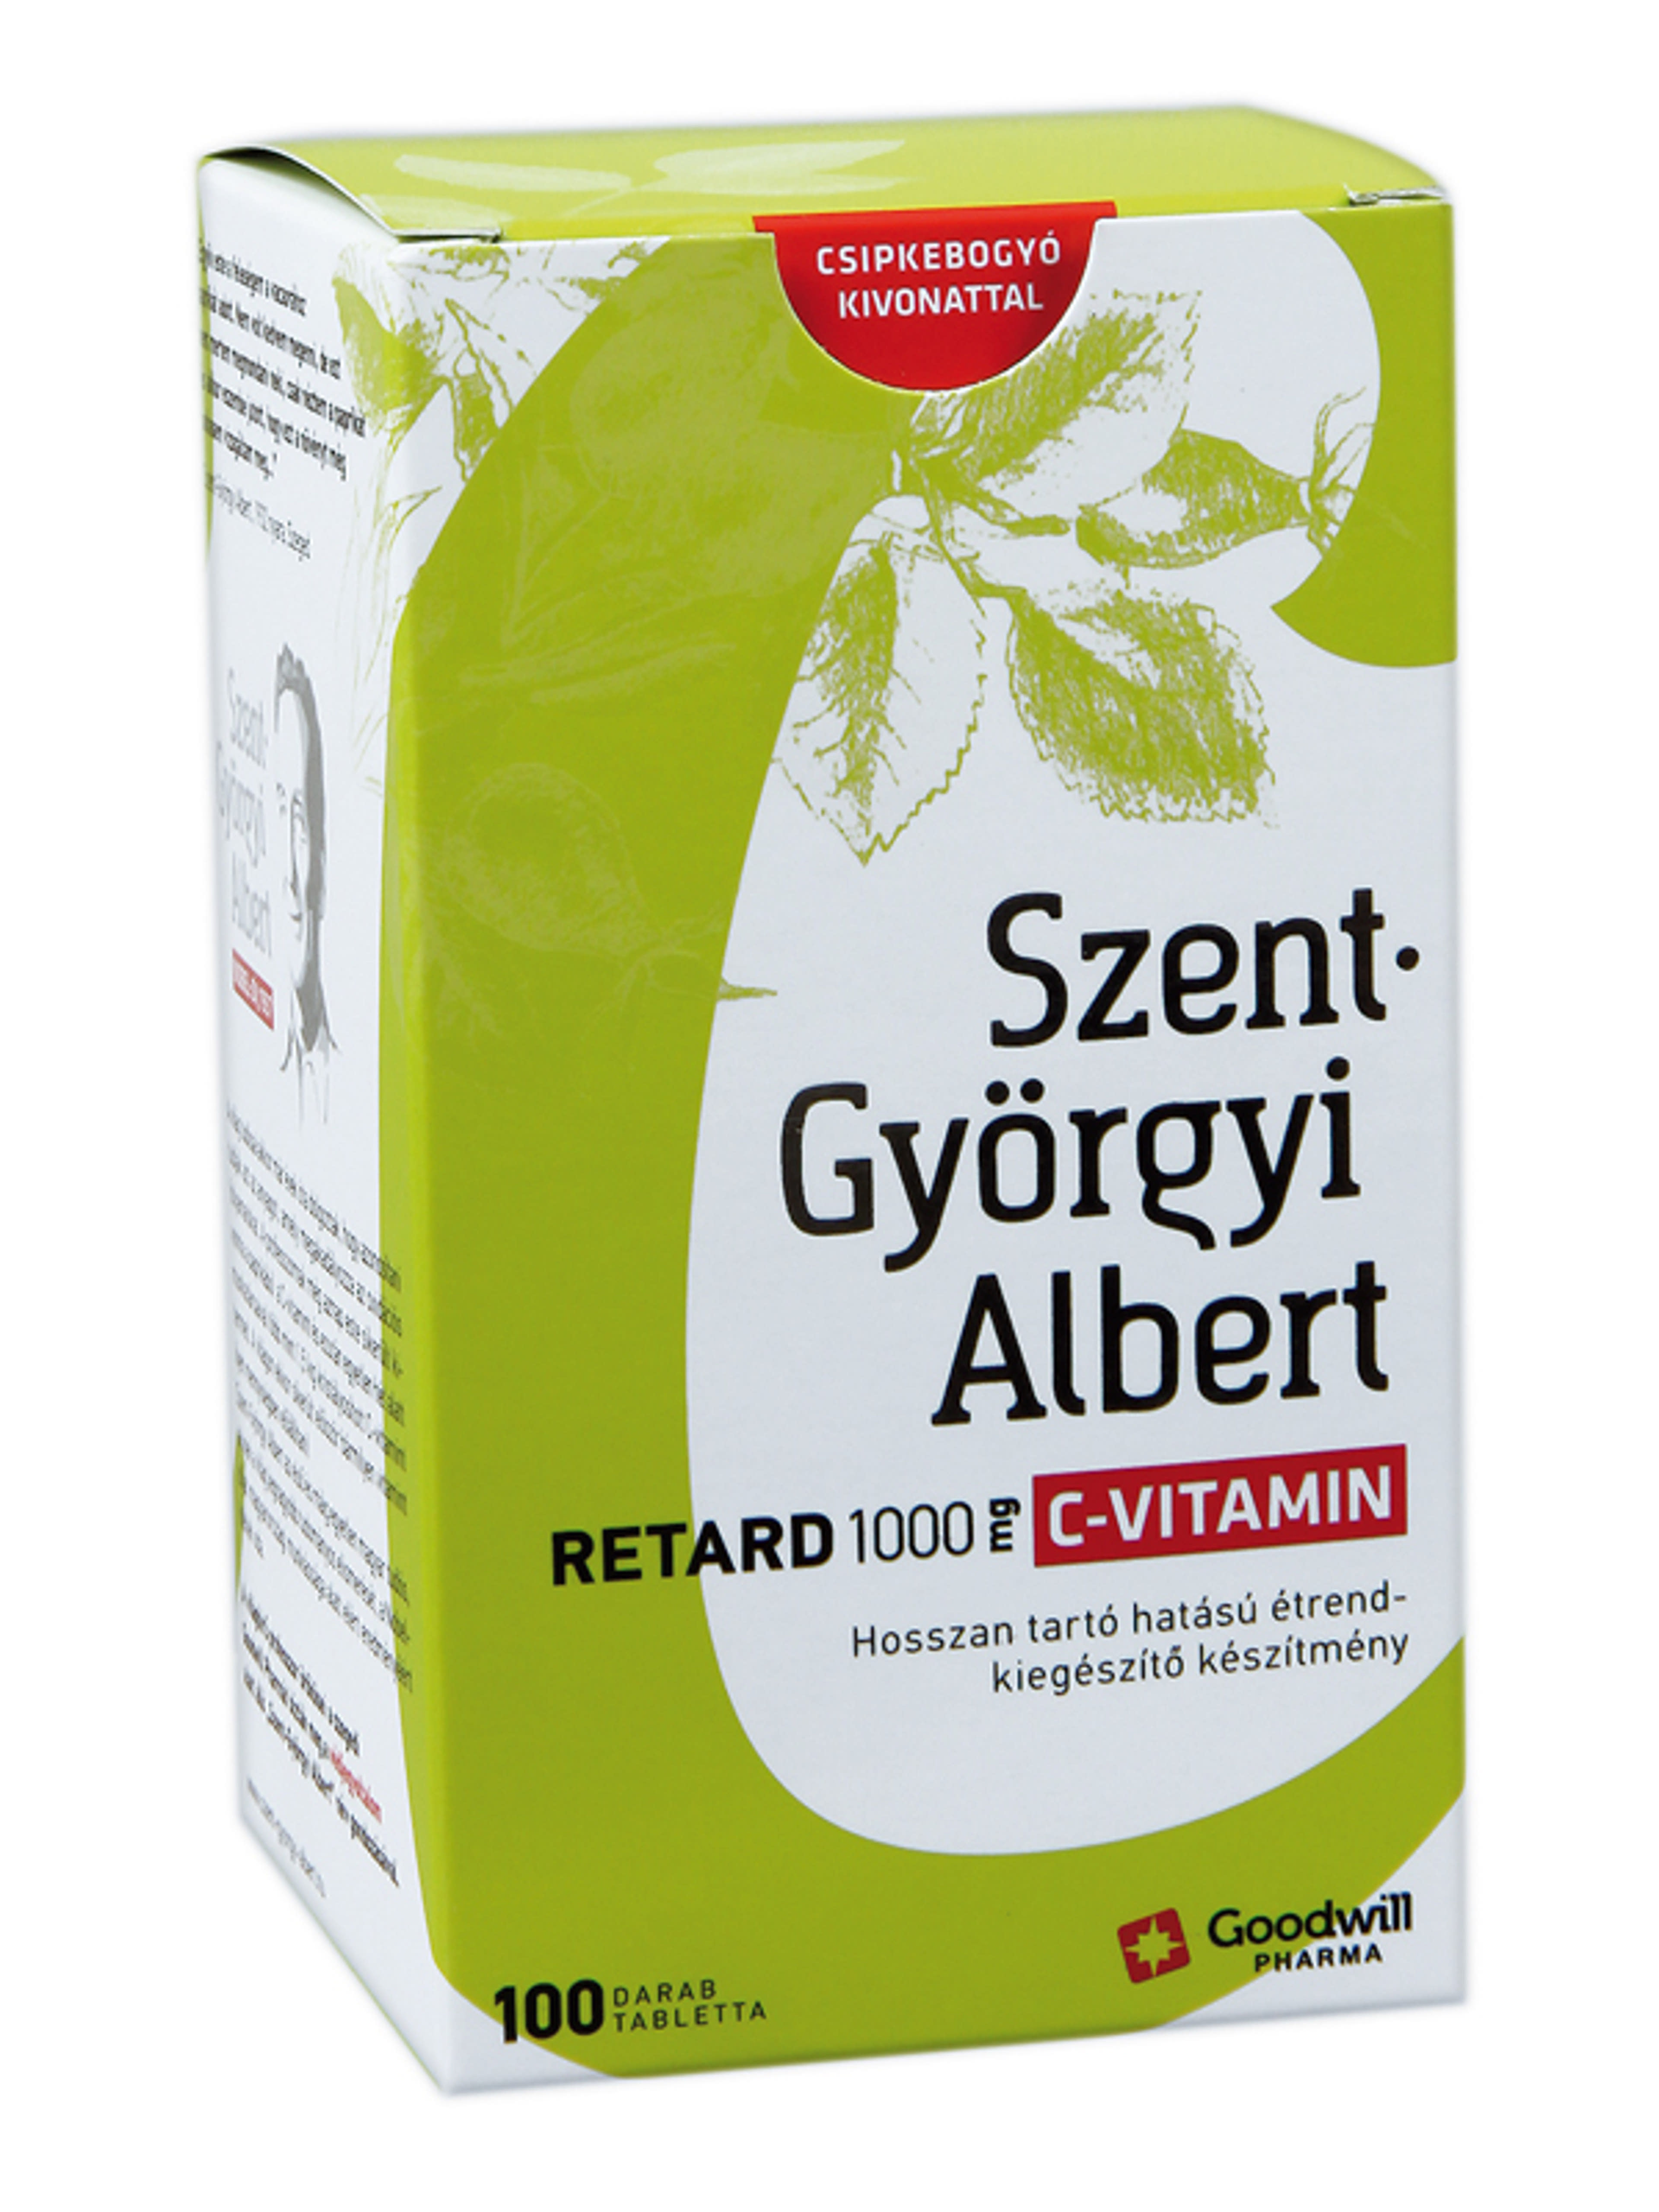 Szent-Györgyi Albert C-Vitamin Retard Tabletta - 100 db